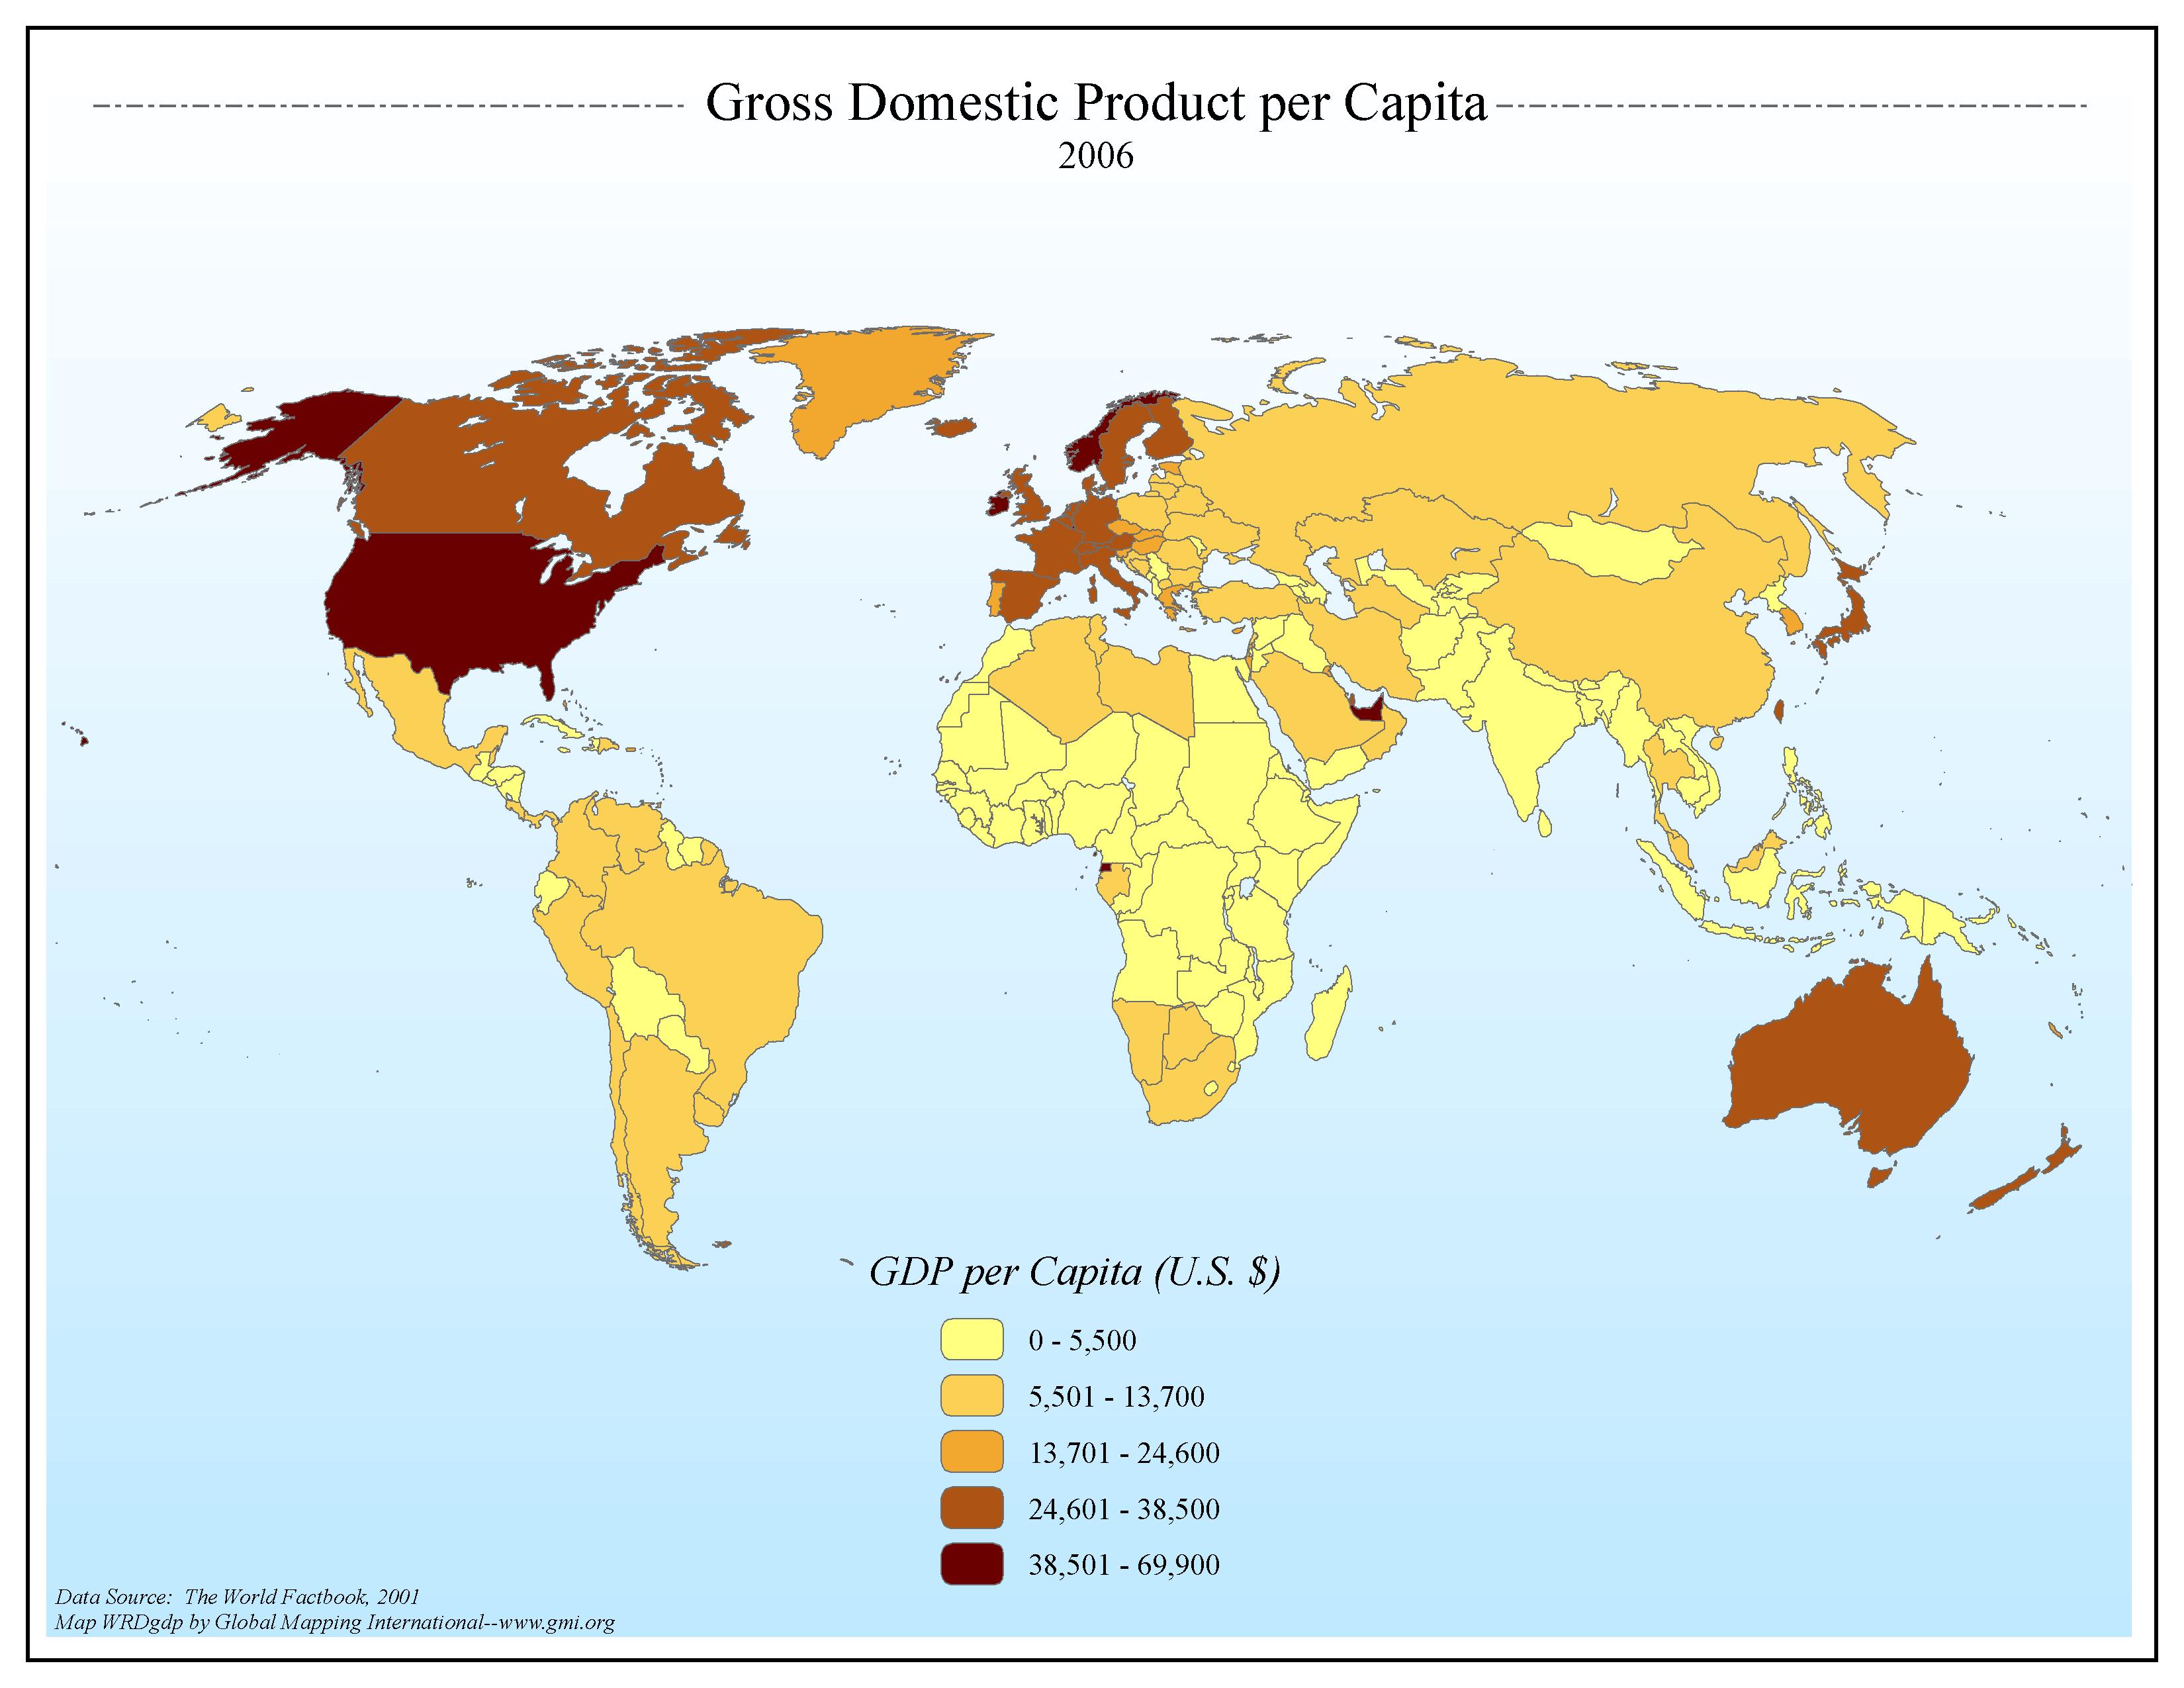 Gross Domestic Product per Capita 2006